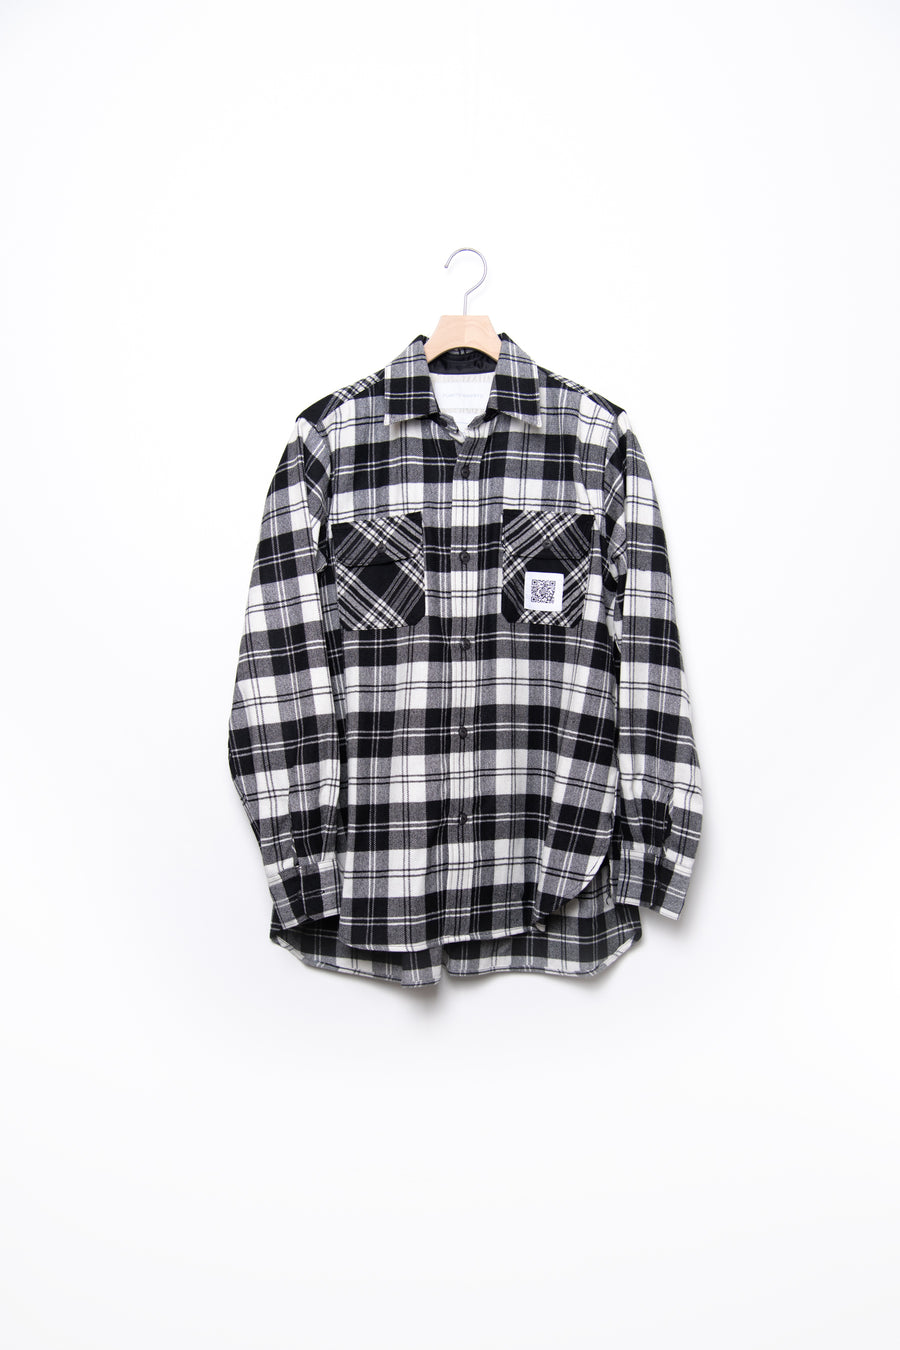 Pleated Flannel Shirt Black FU6-SH-02